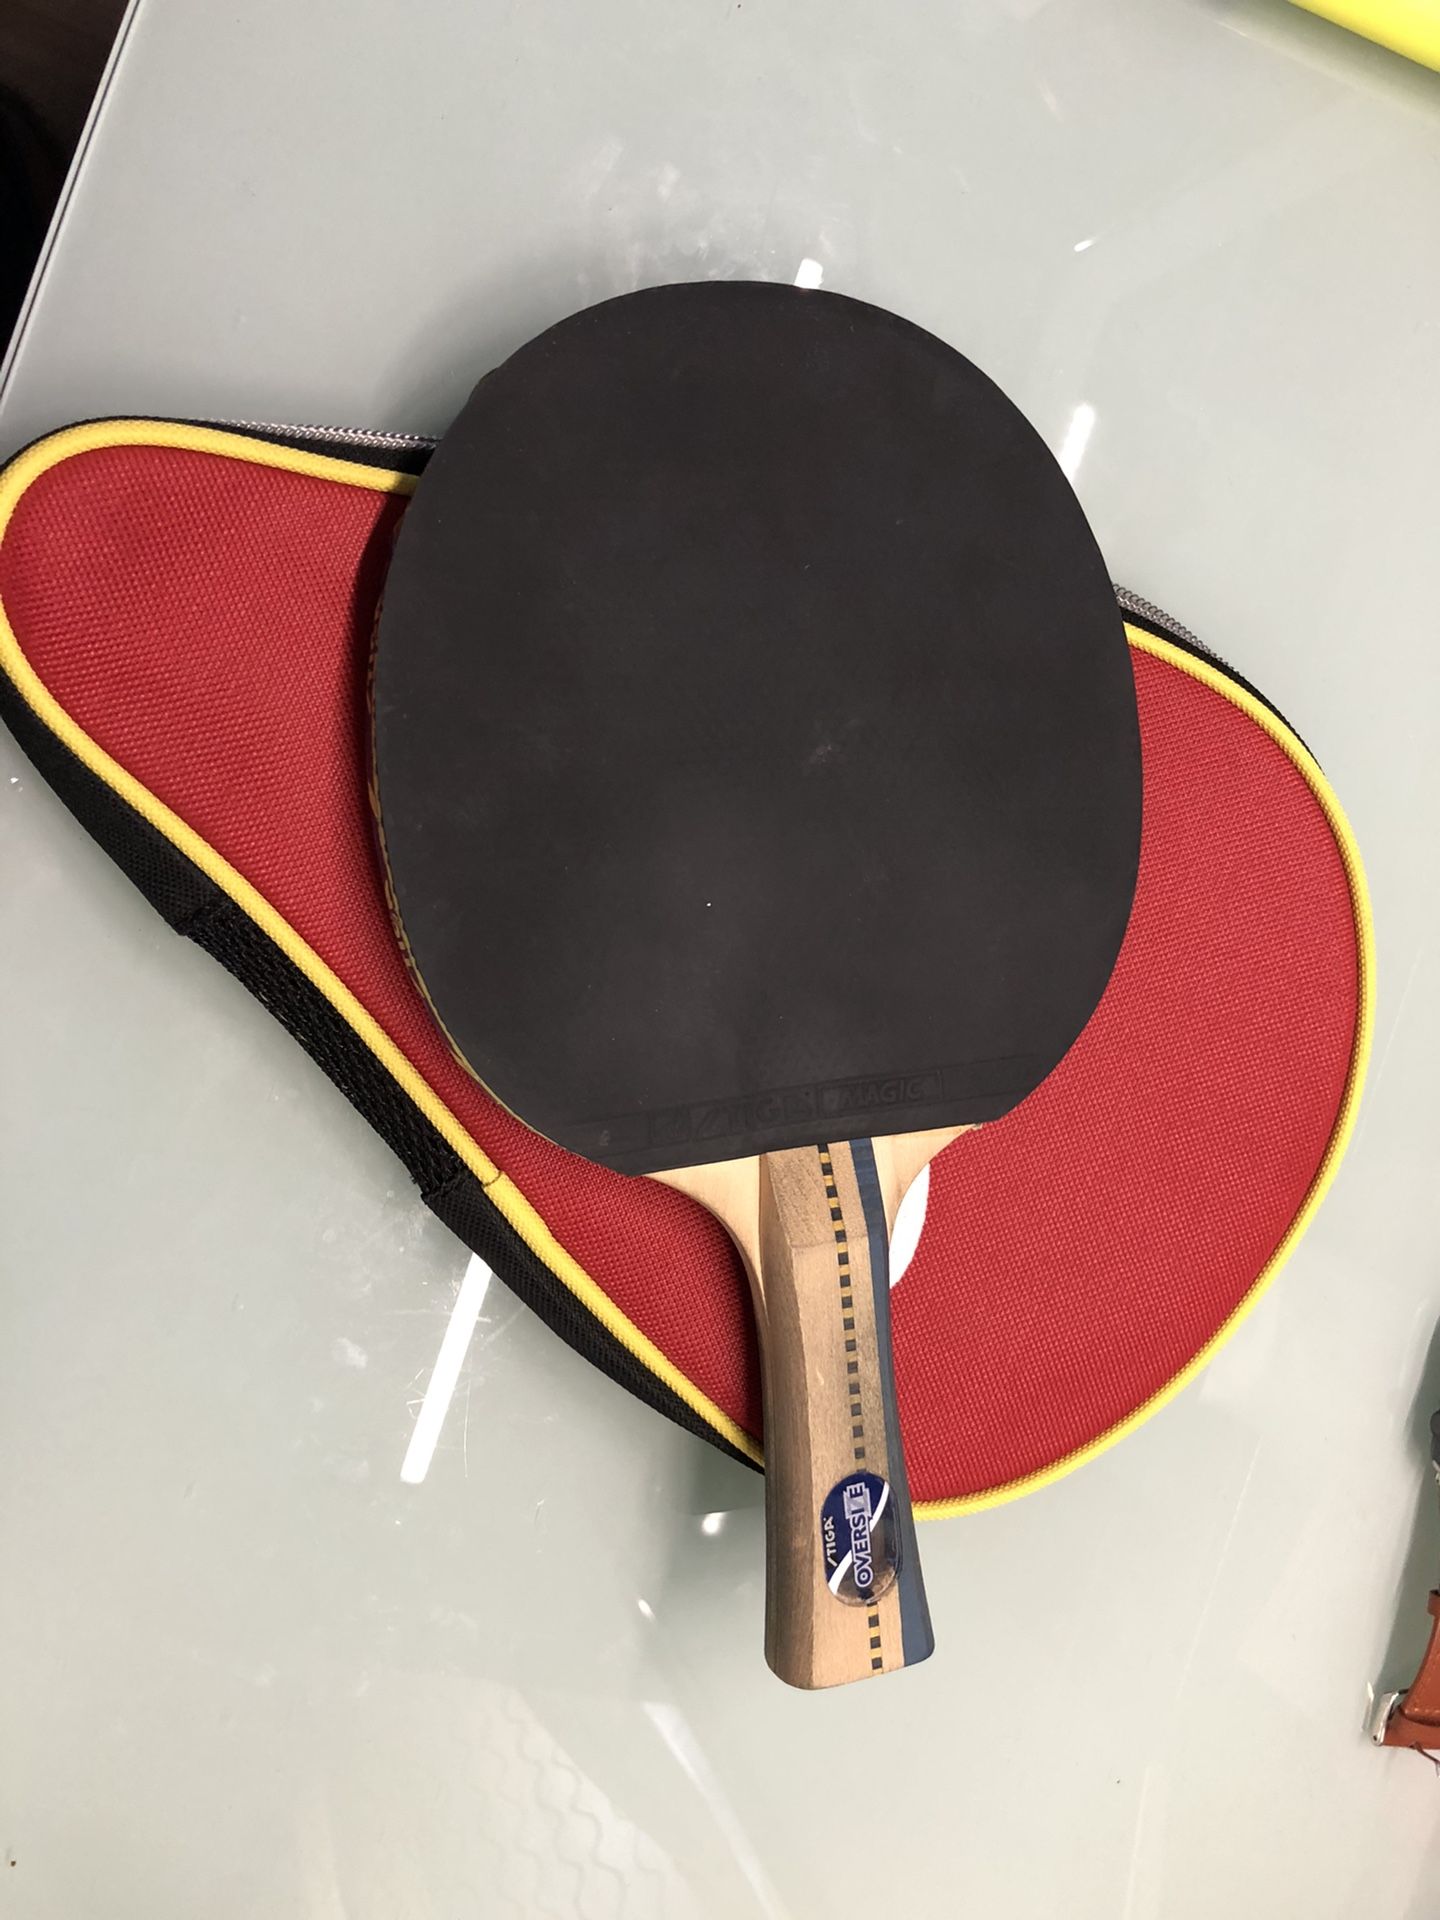 Pingpong table tennis racket